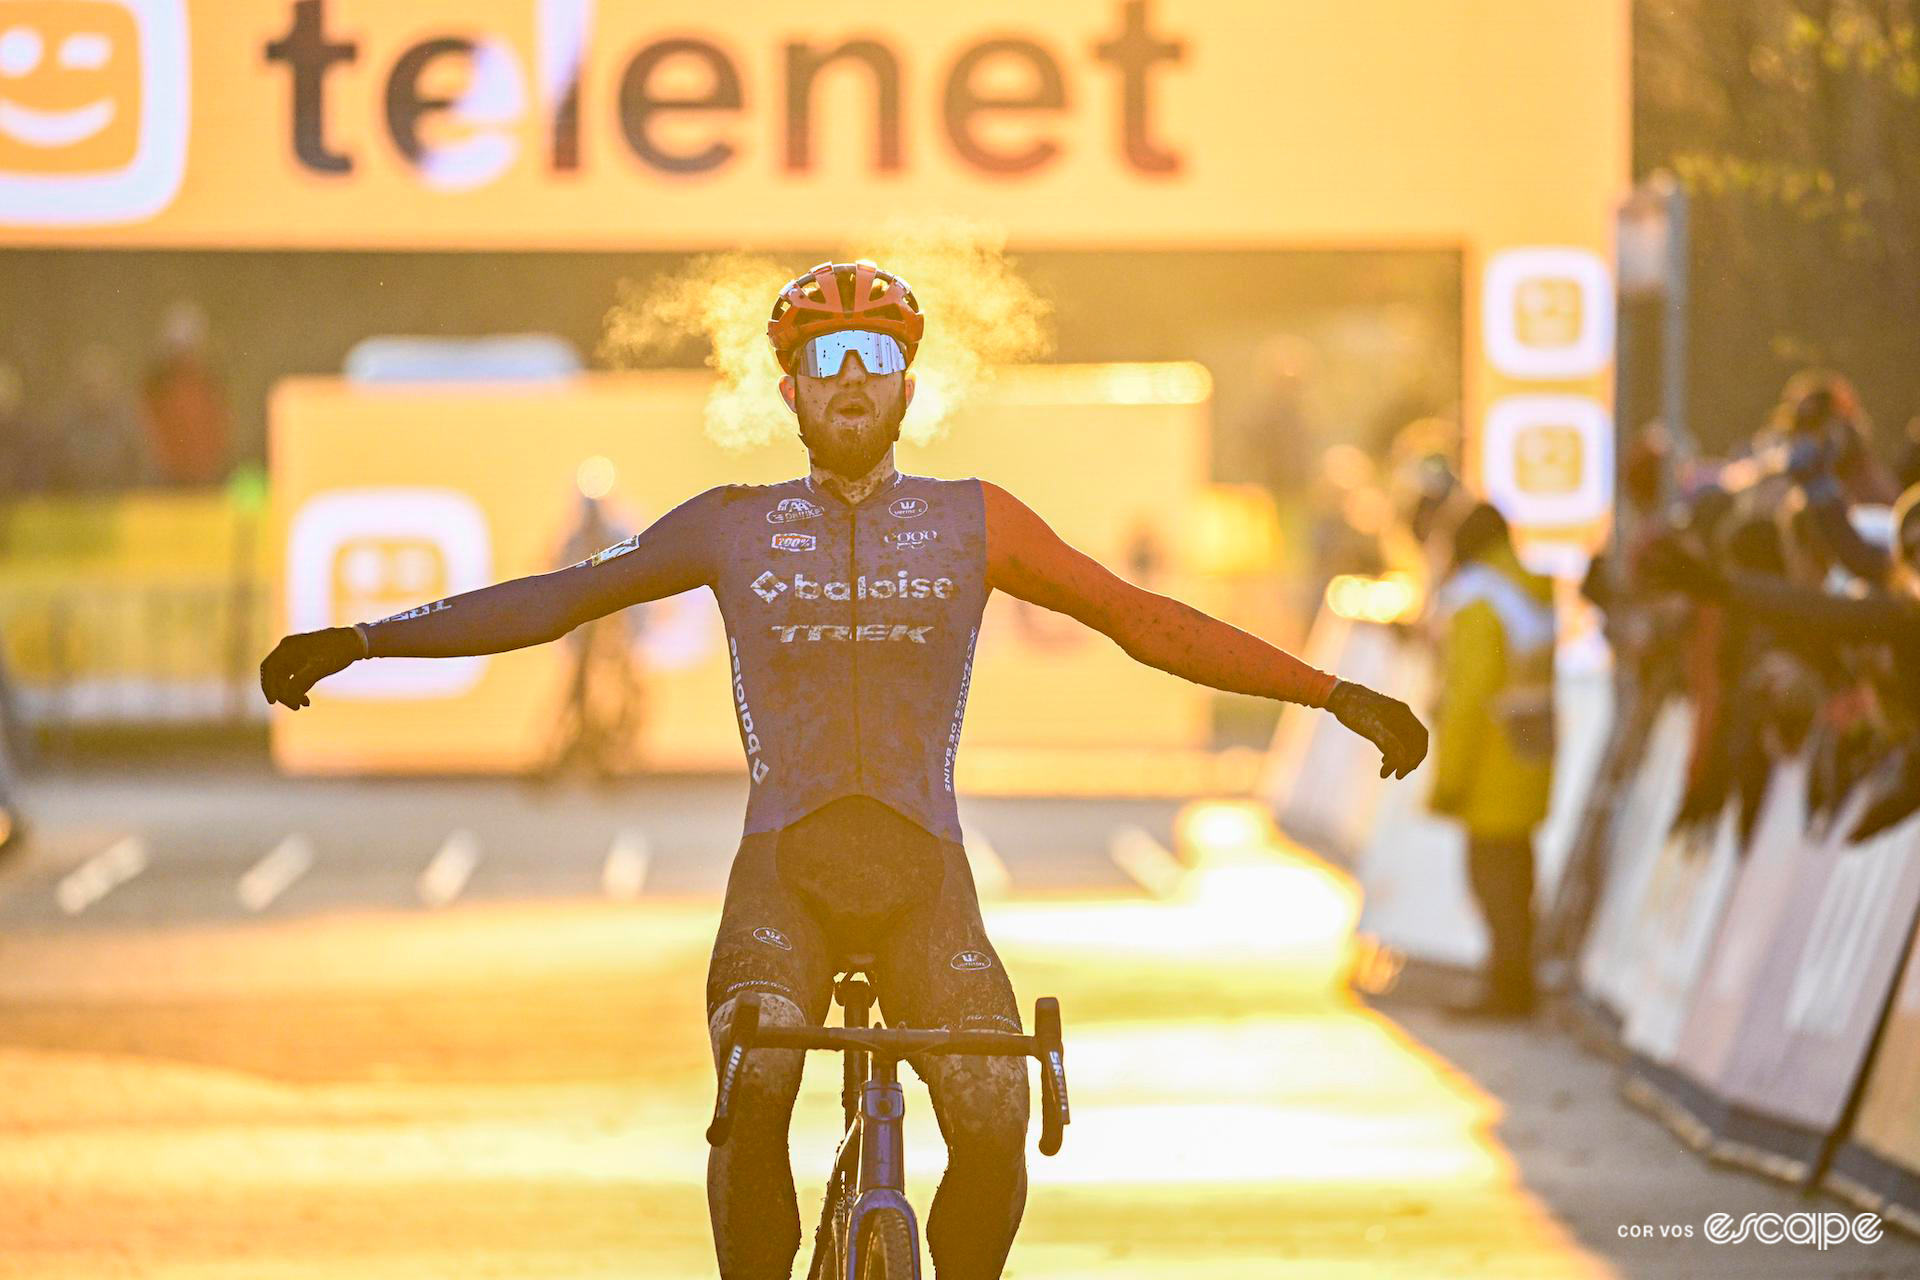 Joris Nieuwenhuis celebrates winning Cyclocross Superprestige Boom with his arms thrown wide, golden light illuminating his breath in the freezing cold temperatures.